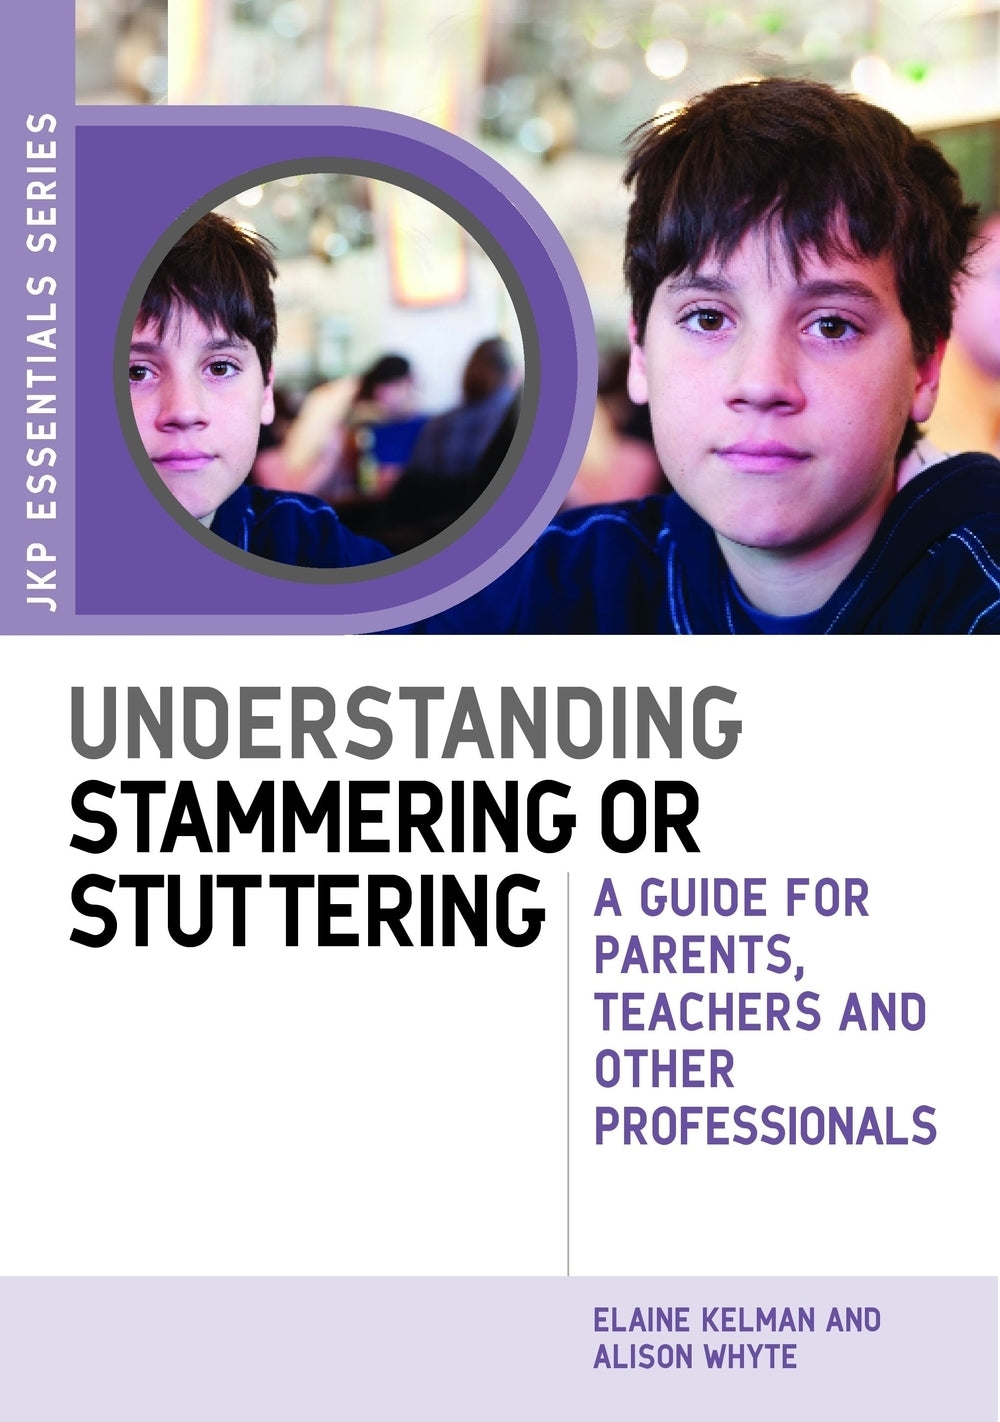 Understanding Stammering or Stuttering by Alison Whyte, Elaine Kelman, Michael Palin